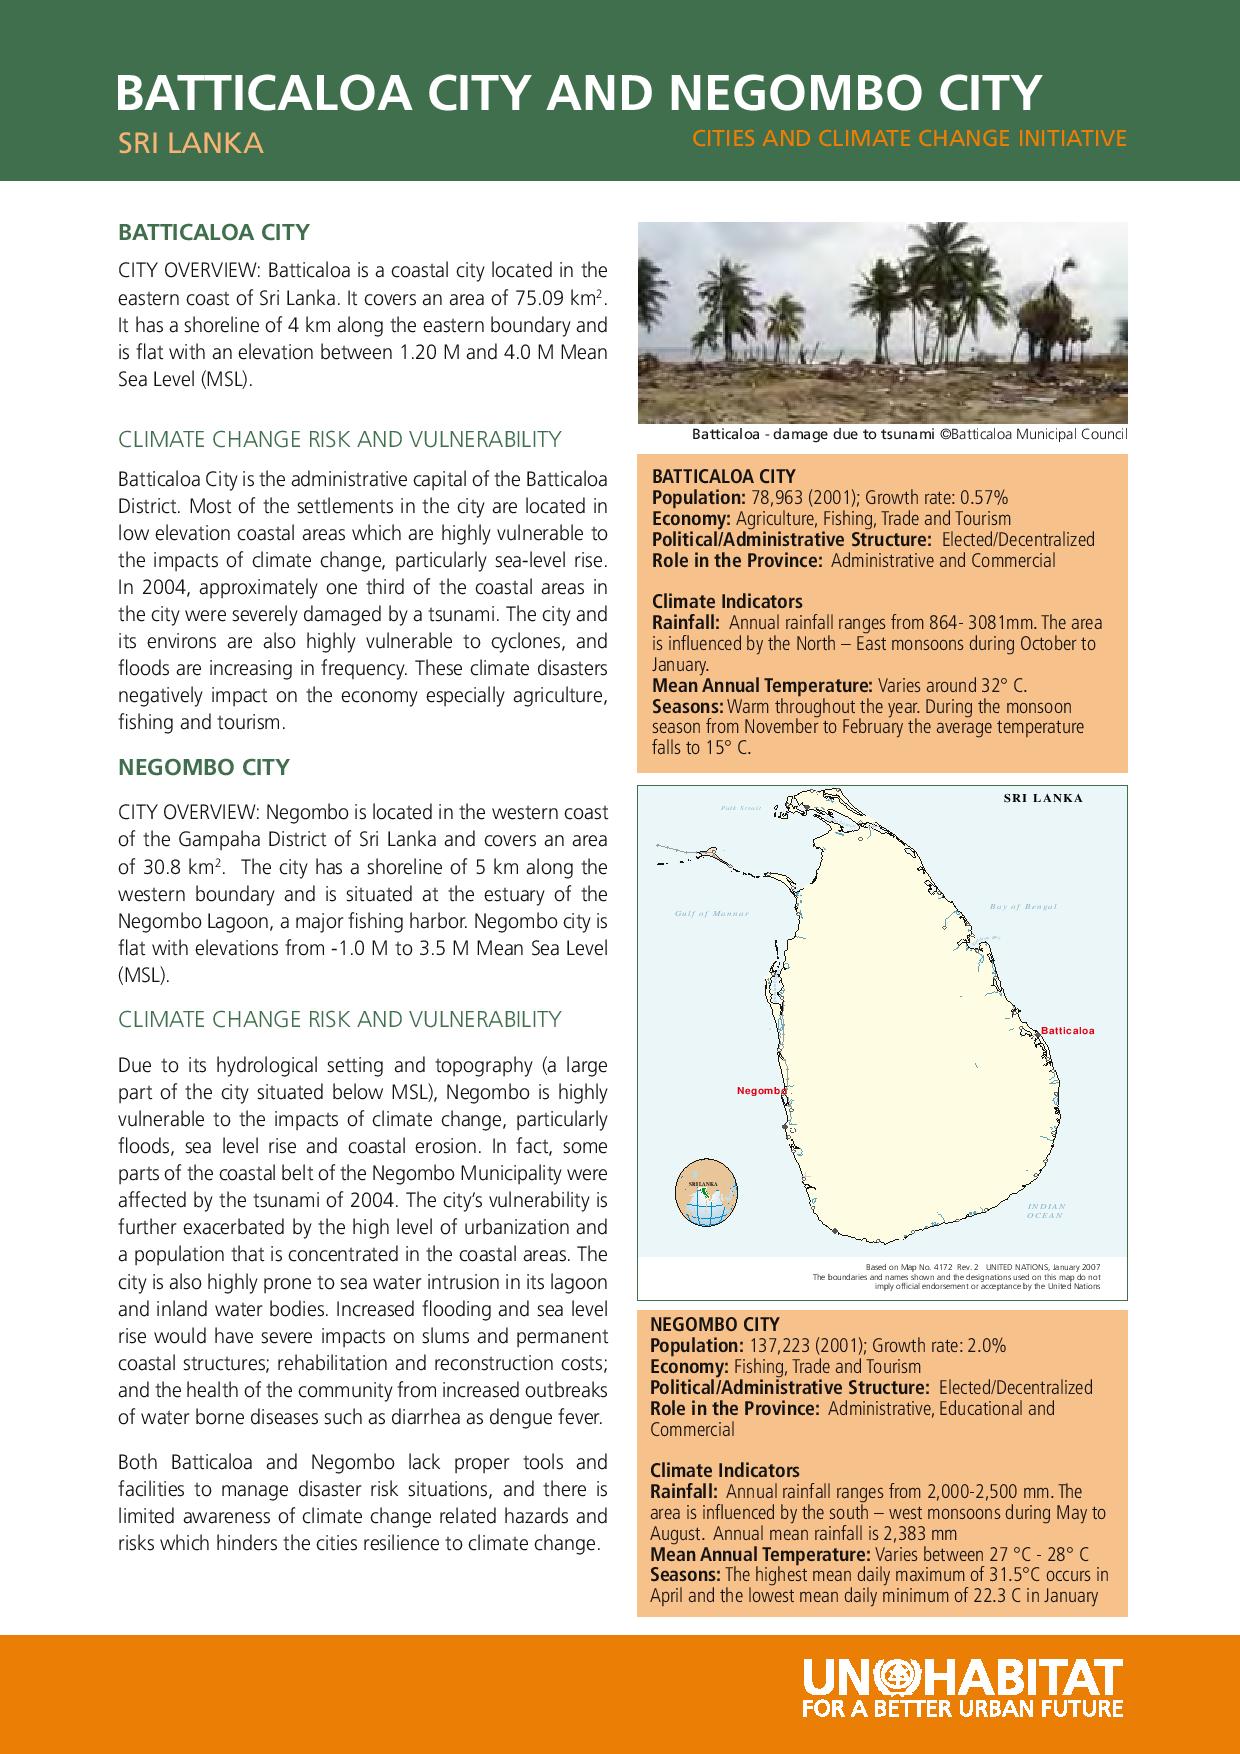 Batticaloa and Negombo, Sri Lanka: CCCI Overview (August 2010)